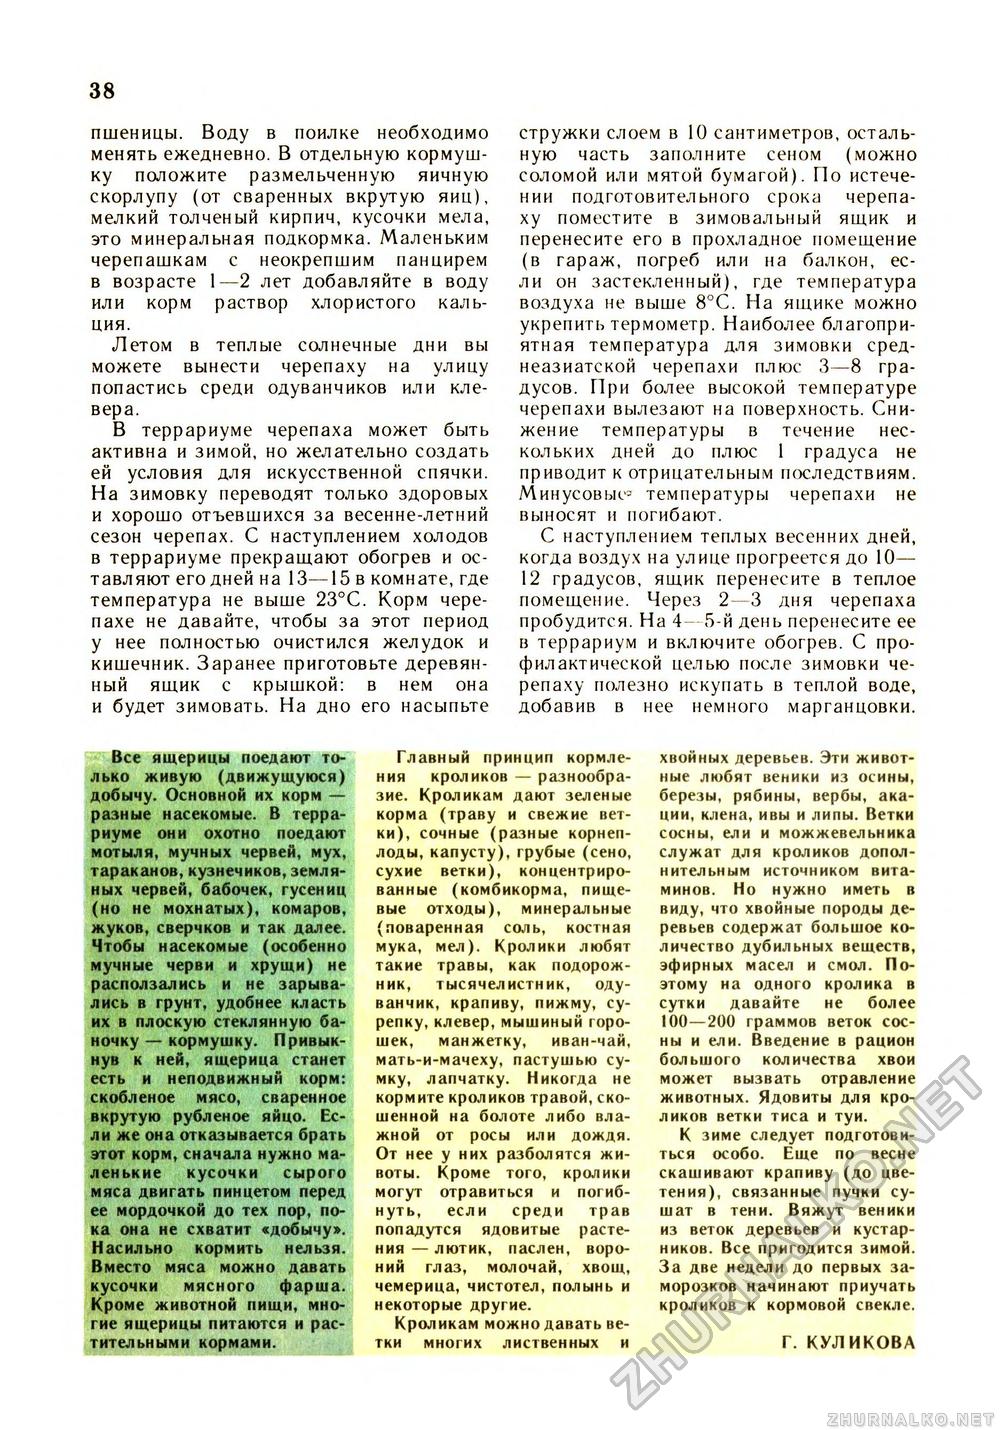 Юный Натуралист 1991-05, страница 40